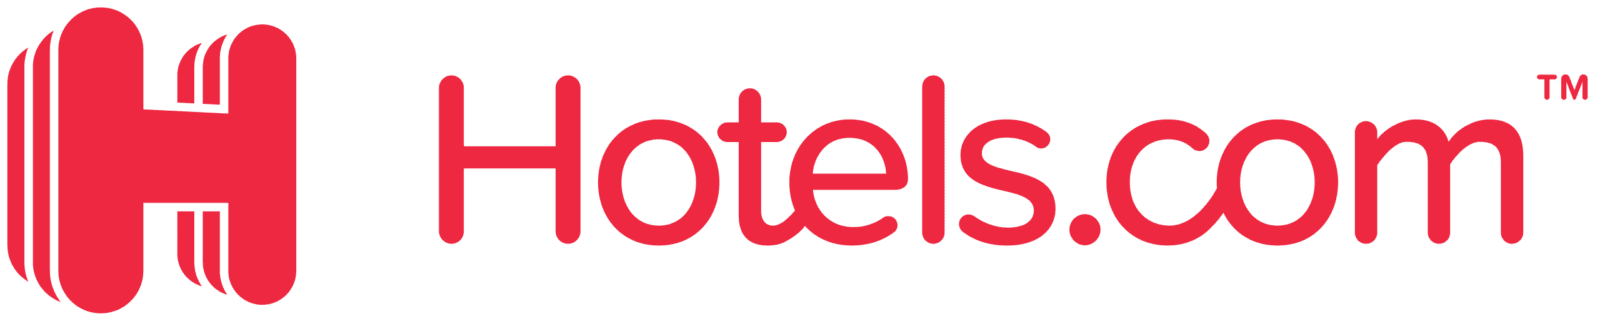 2560px-Hotels.com_logo.svg